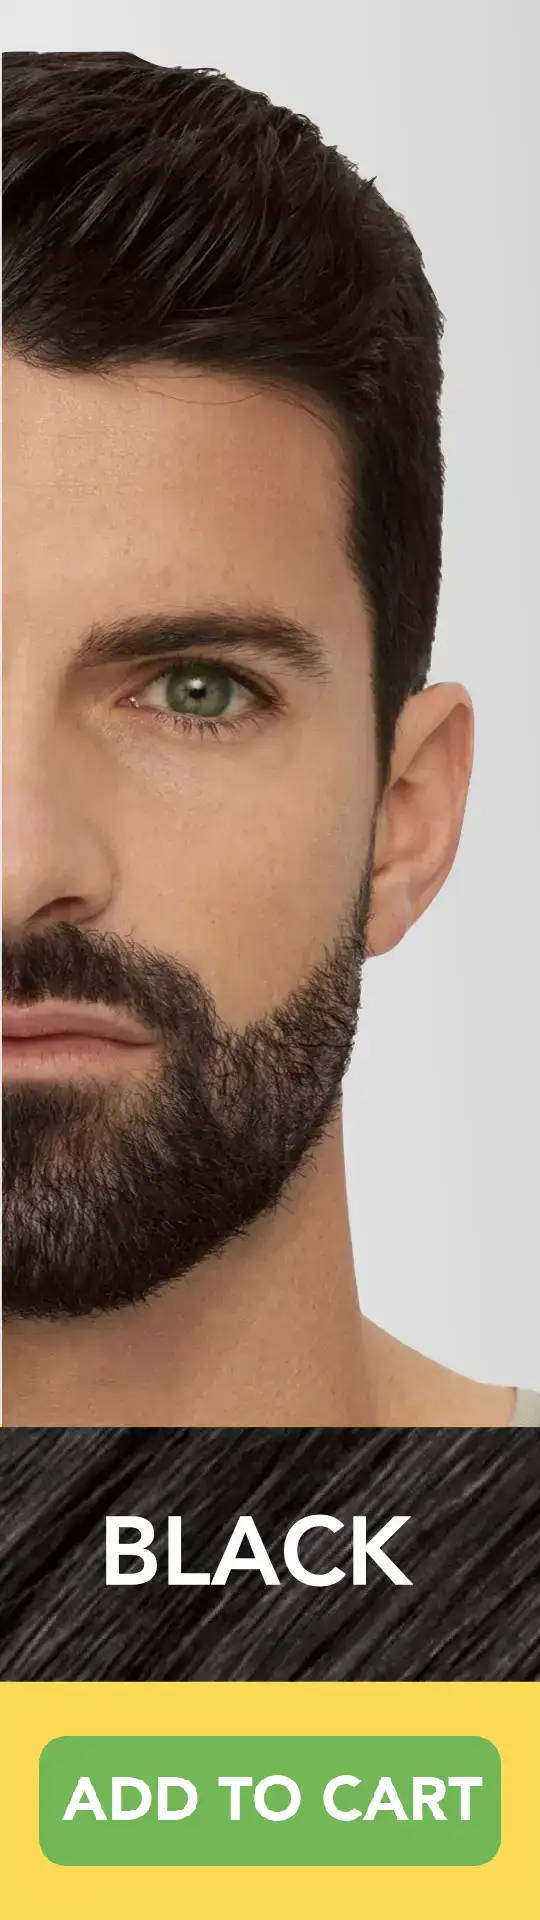 Natural Black Hair and Beard Dye